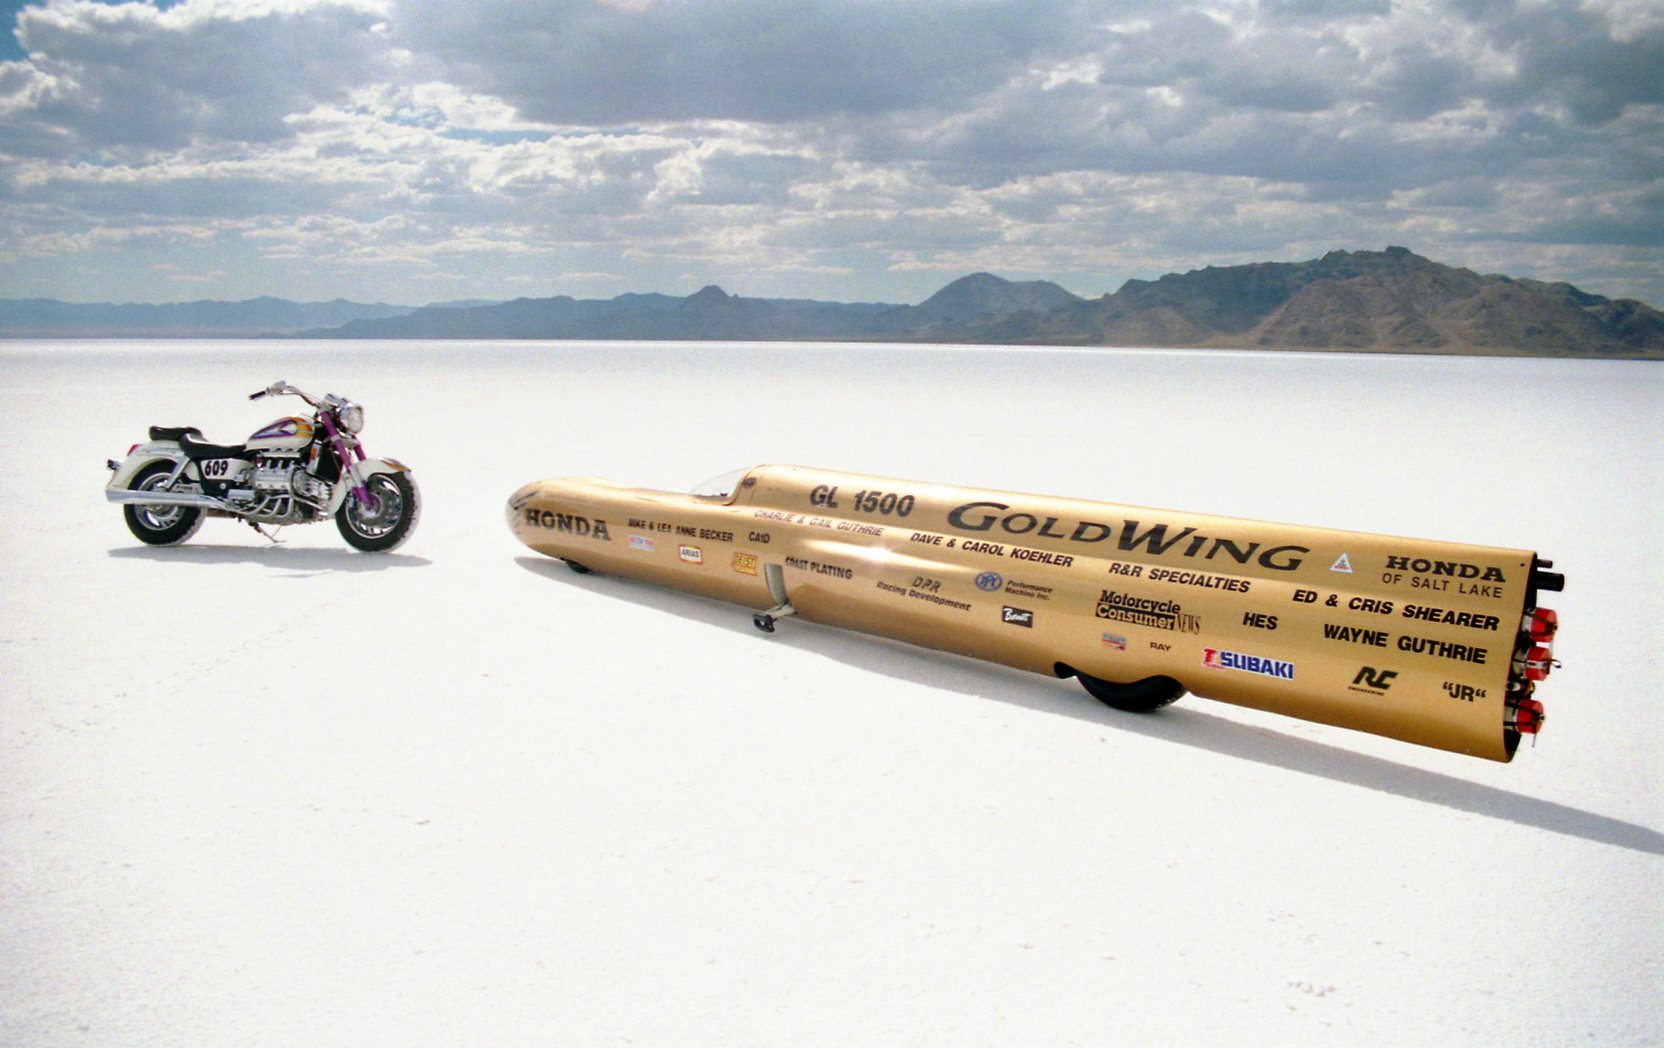 Kenny Lyons GoldWing Streamliner and bike on the salt